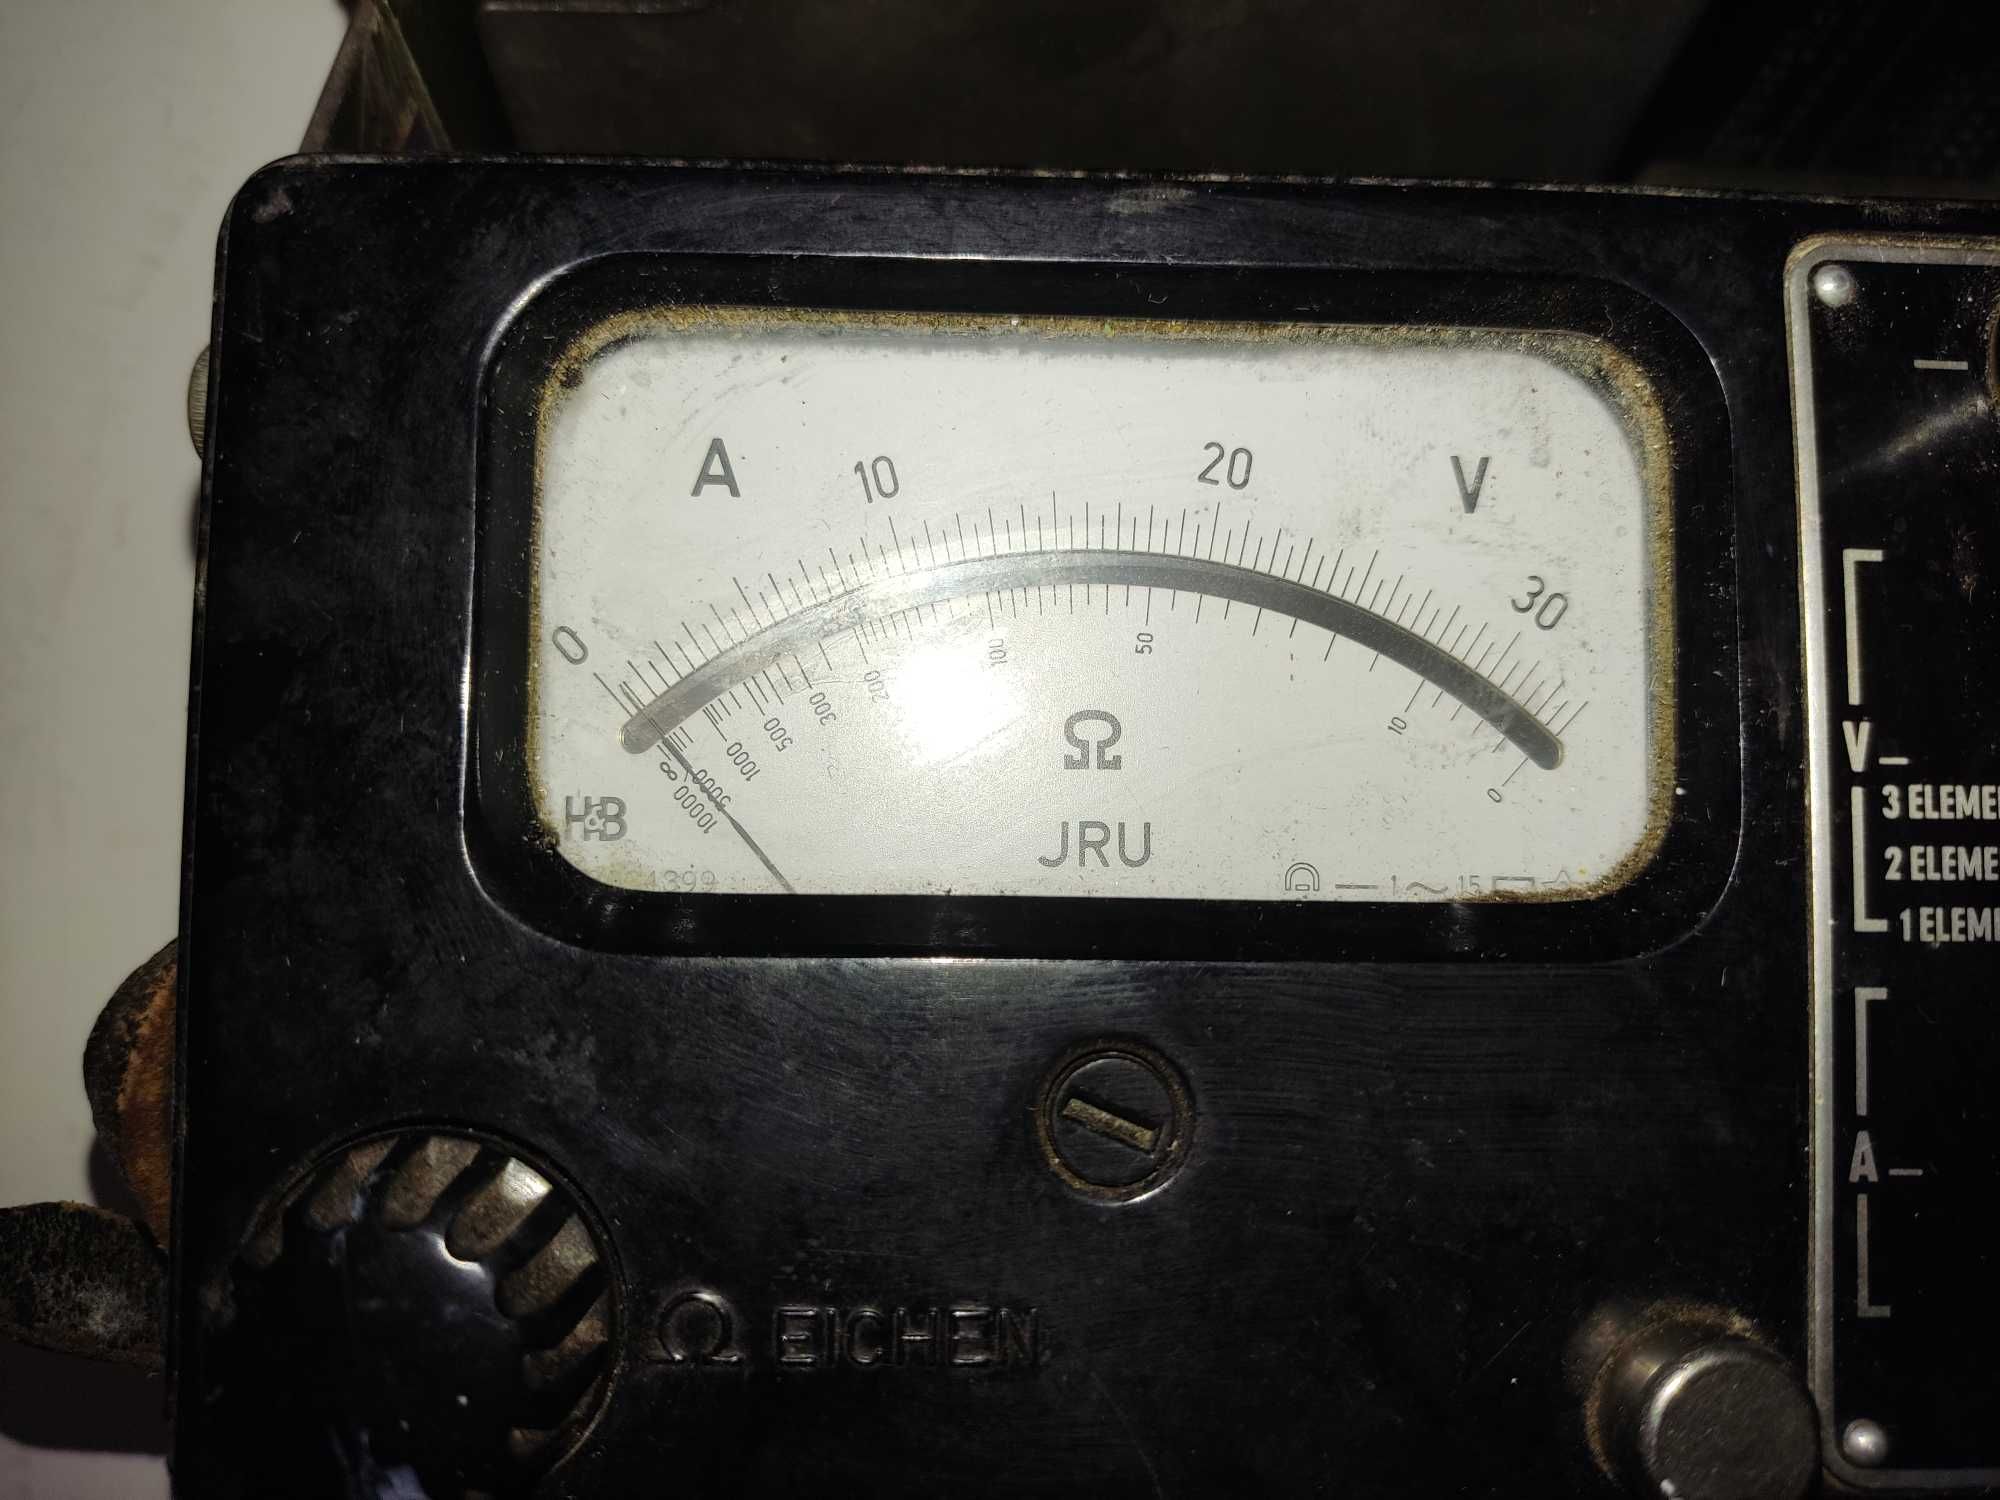 vand aparat multimeter vechi  model eb 50-3 iru